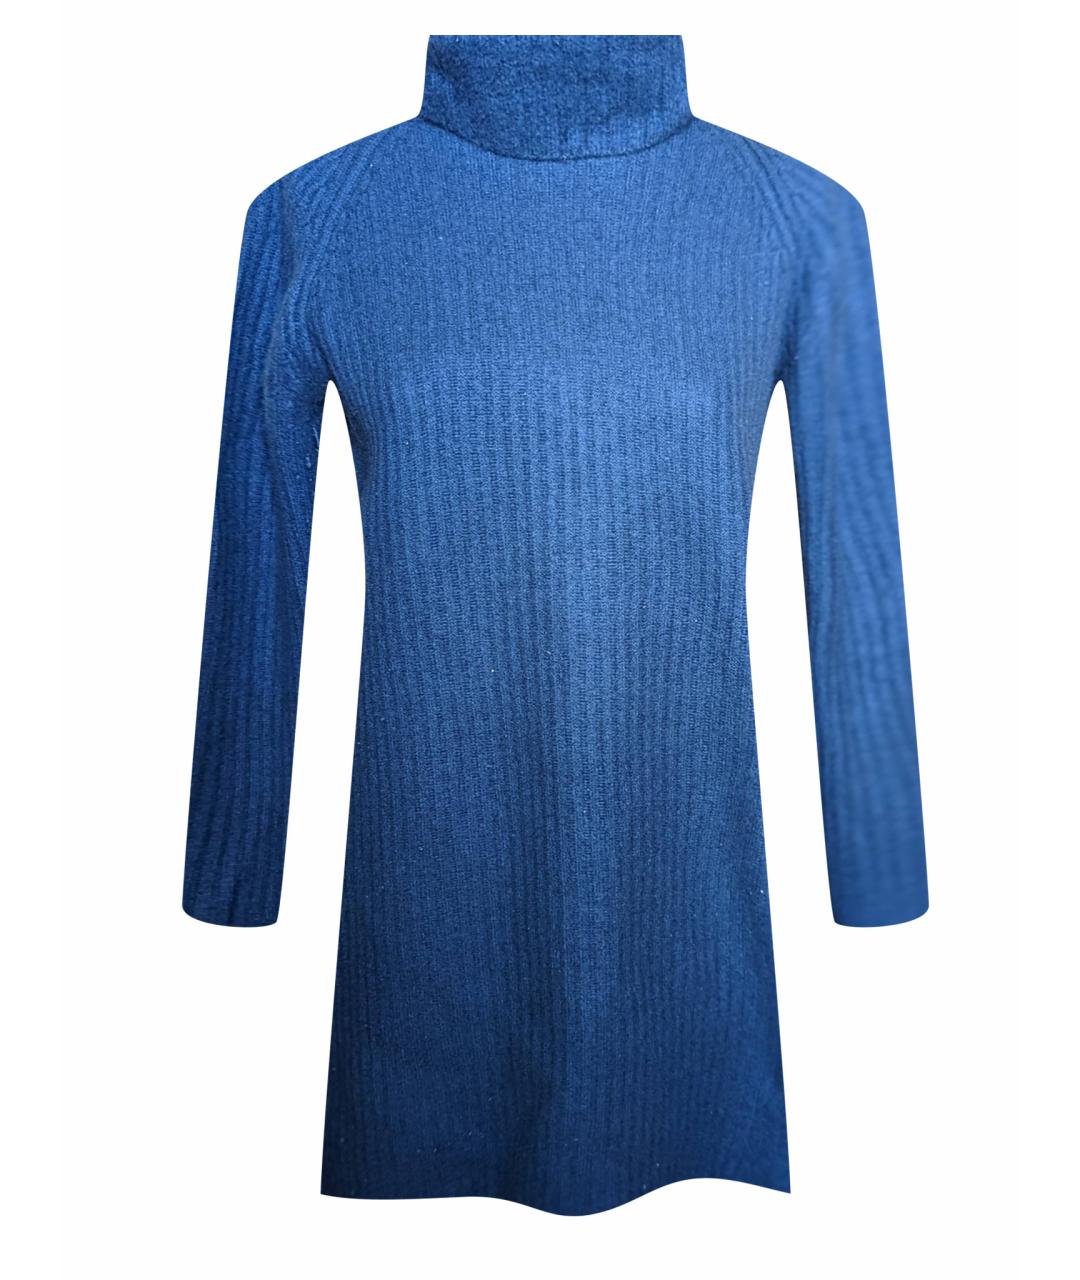 LORO PIANA Темно-синий кашемировый джемпер / свитер, фото 1